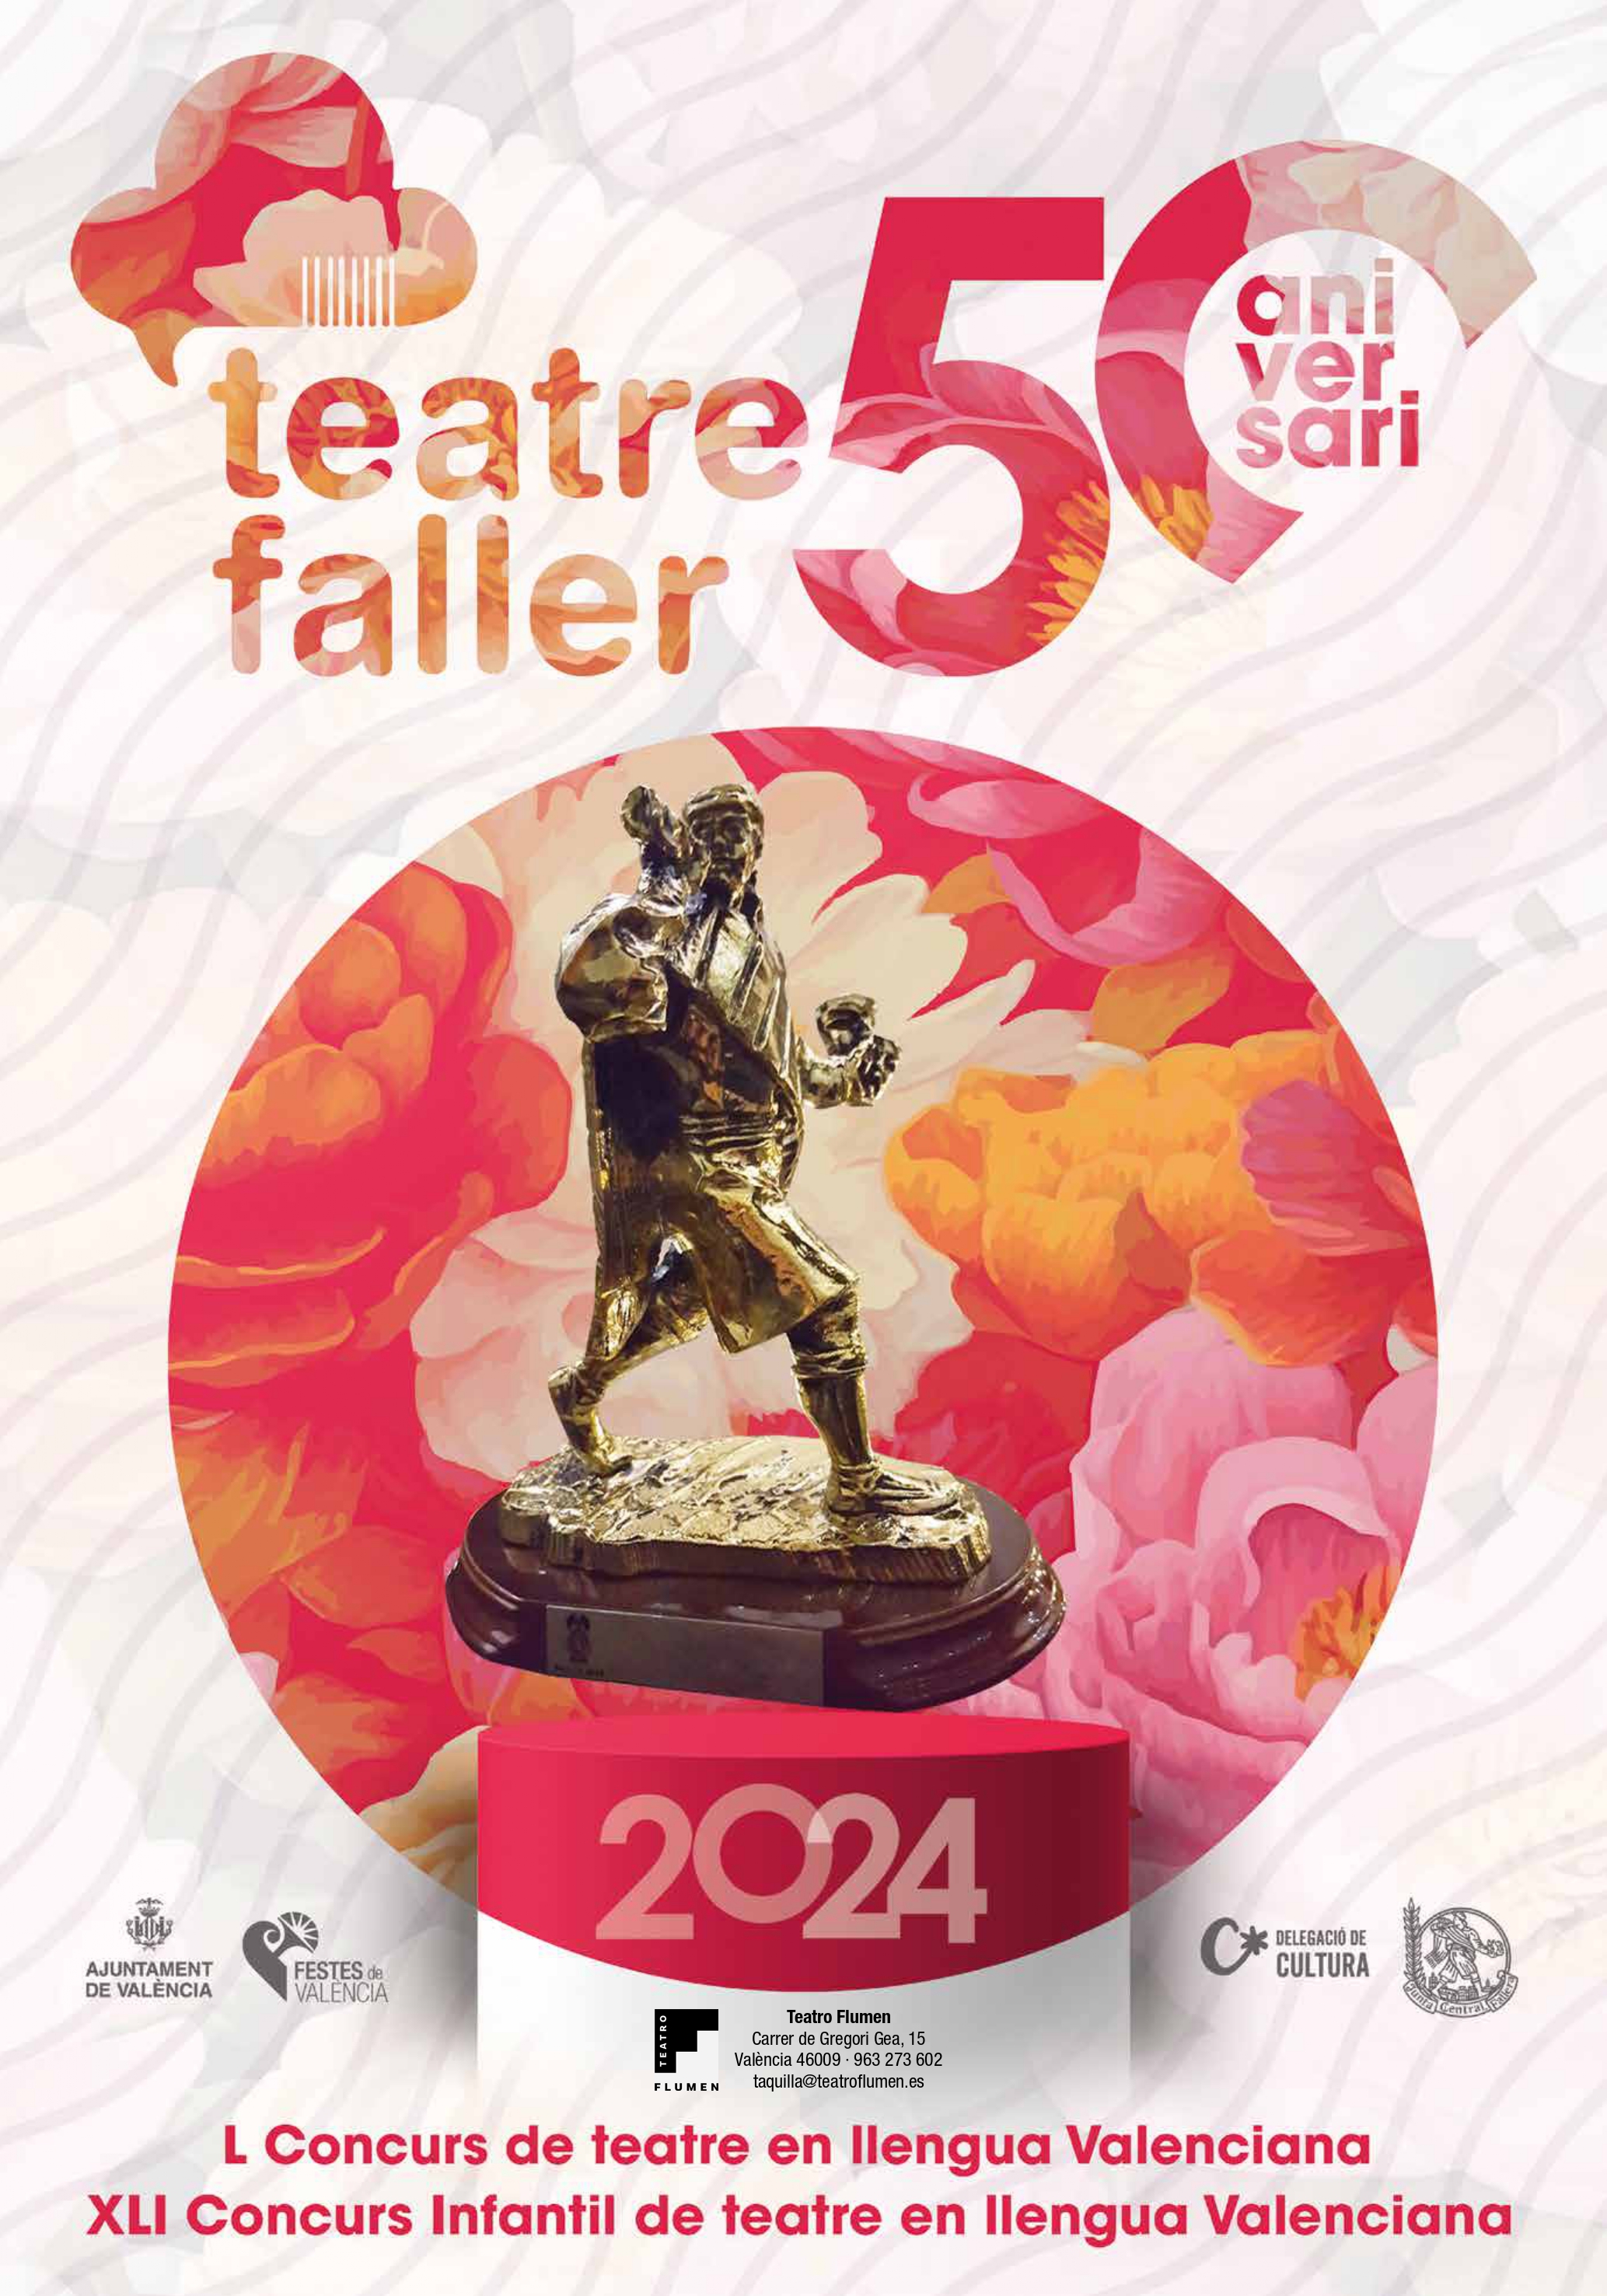 Teatre_faller_35_x_50_ok_baja_page-0001.jpg - 2.11 MB